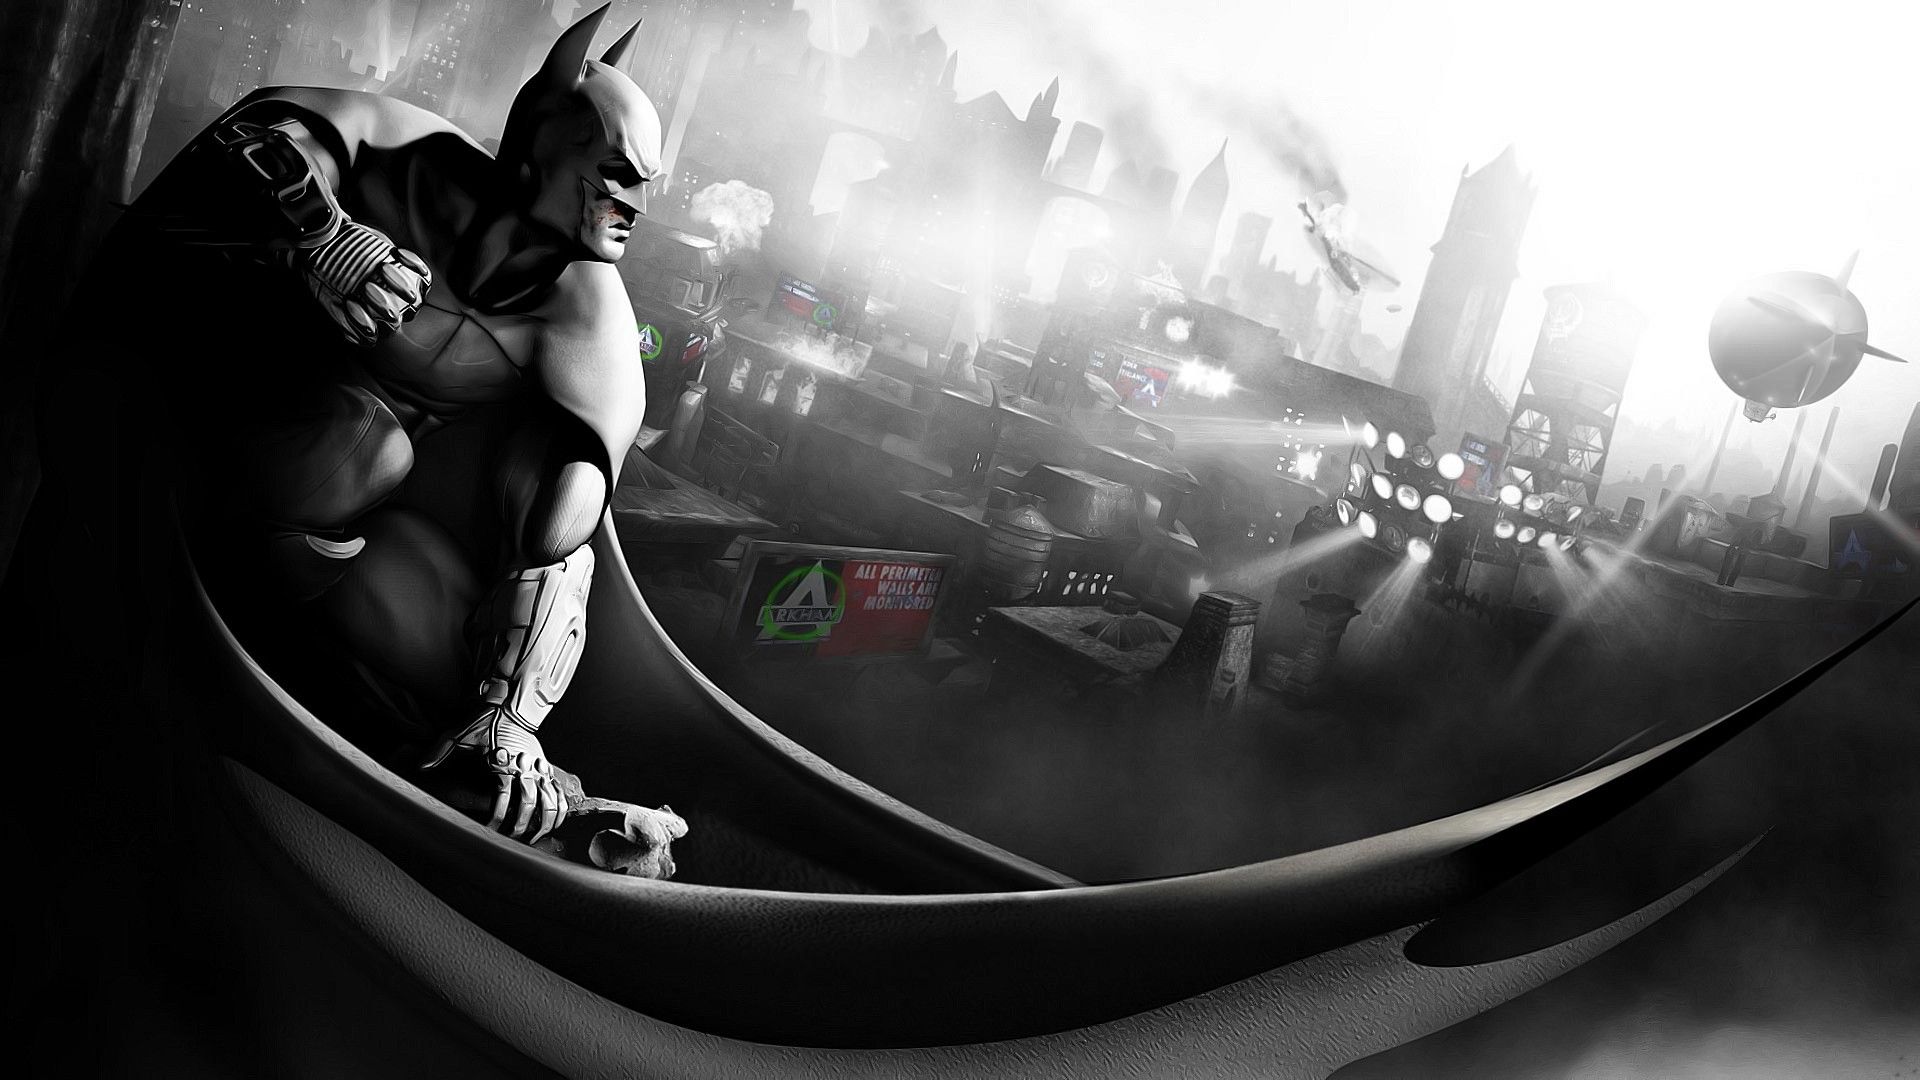 Batman: Arkham City – Game Art and Screenshots Gallery